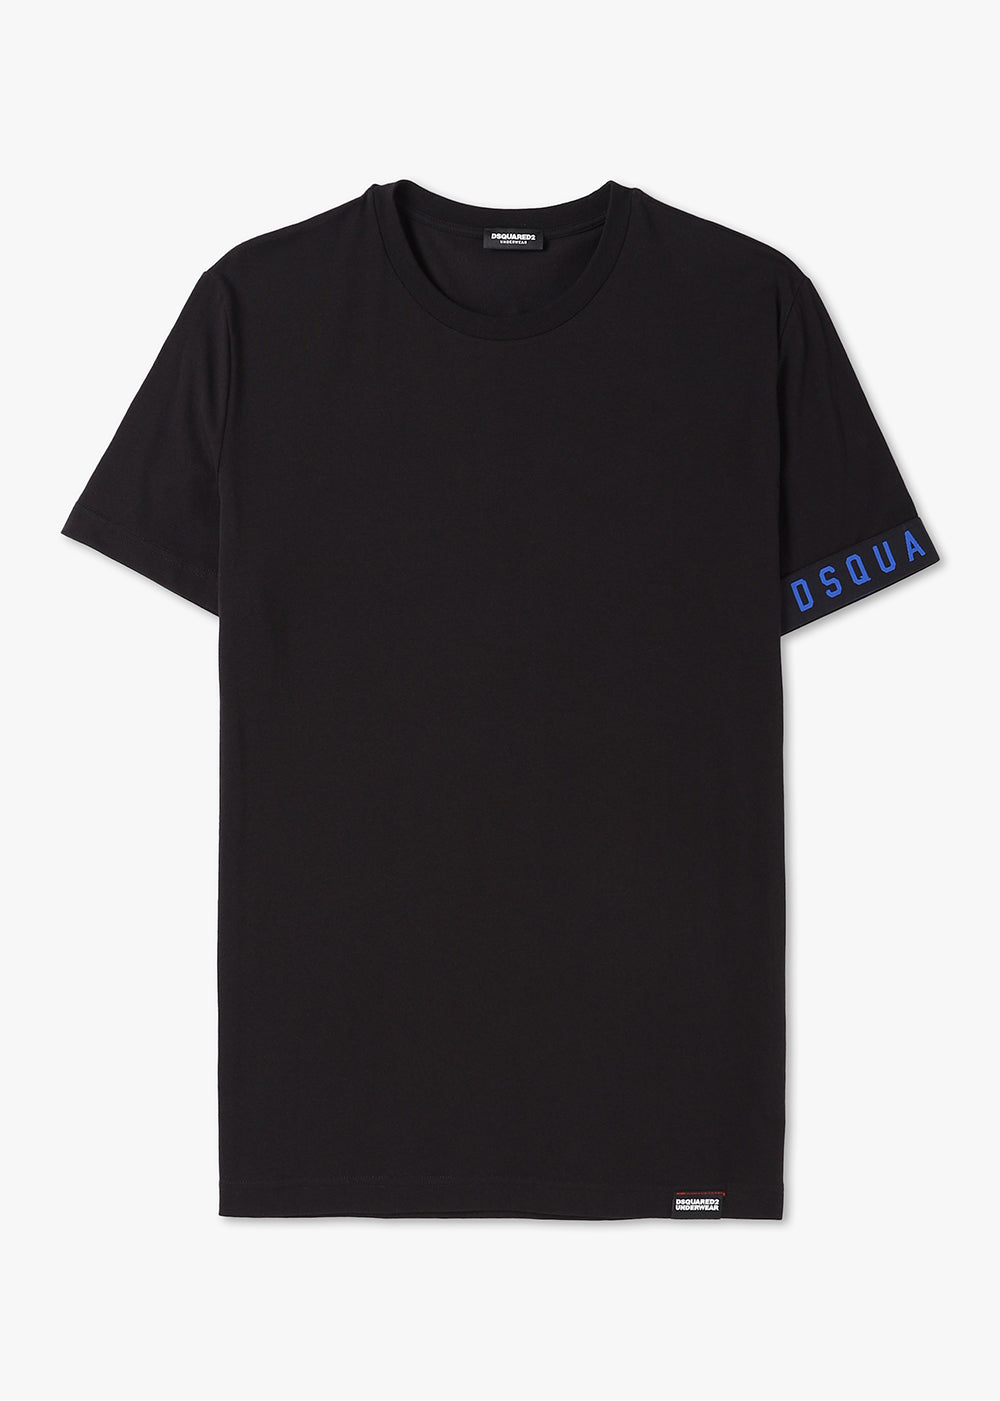 Dsquared2 Mens T-Shirt In Black/Blue - Black